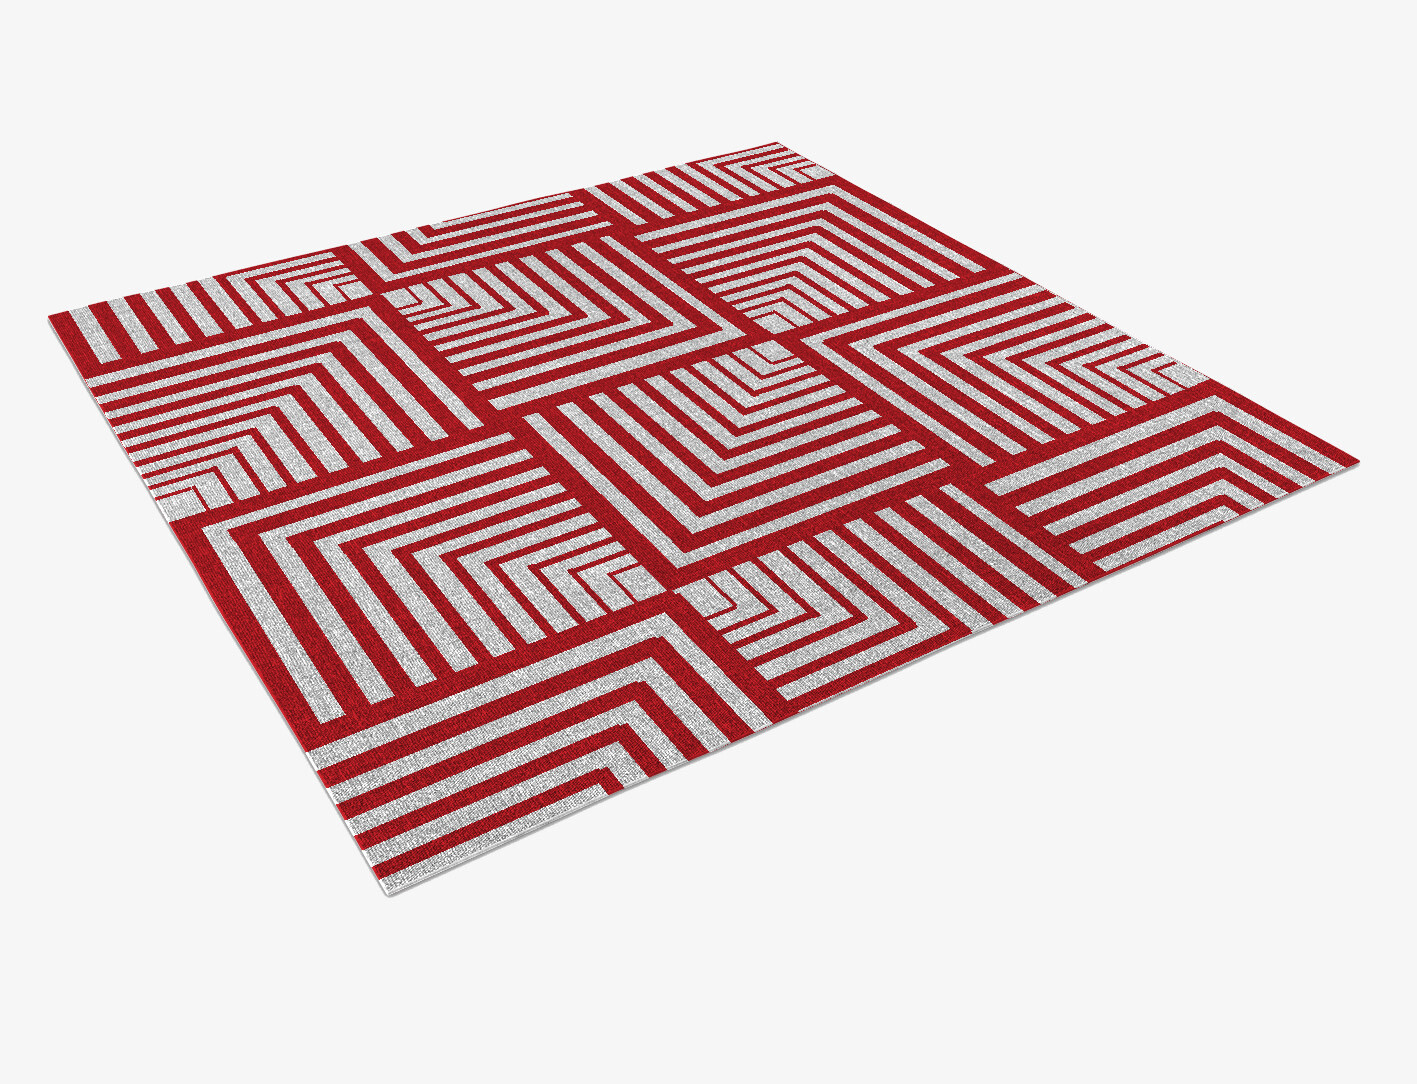 Twill Geometric Square Outdoor Recycled Yarn Custom Rug by Rug Artisan